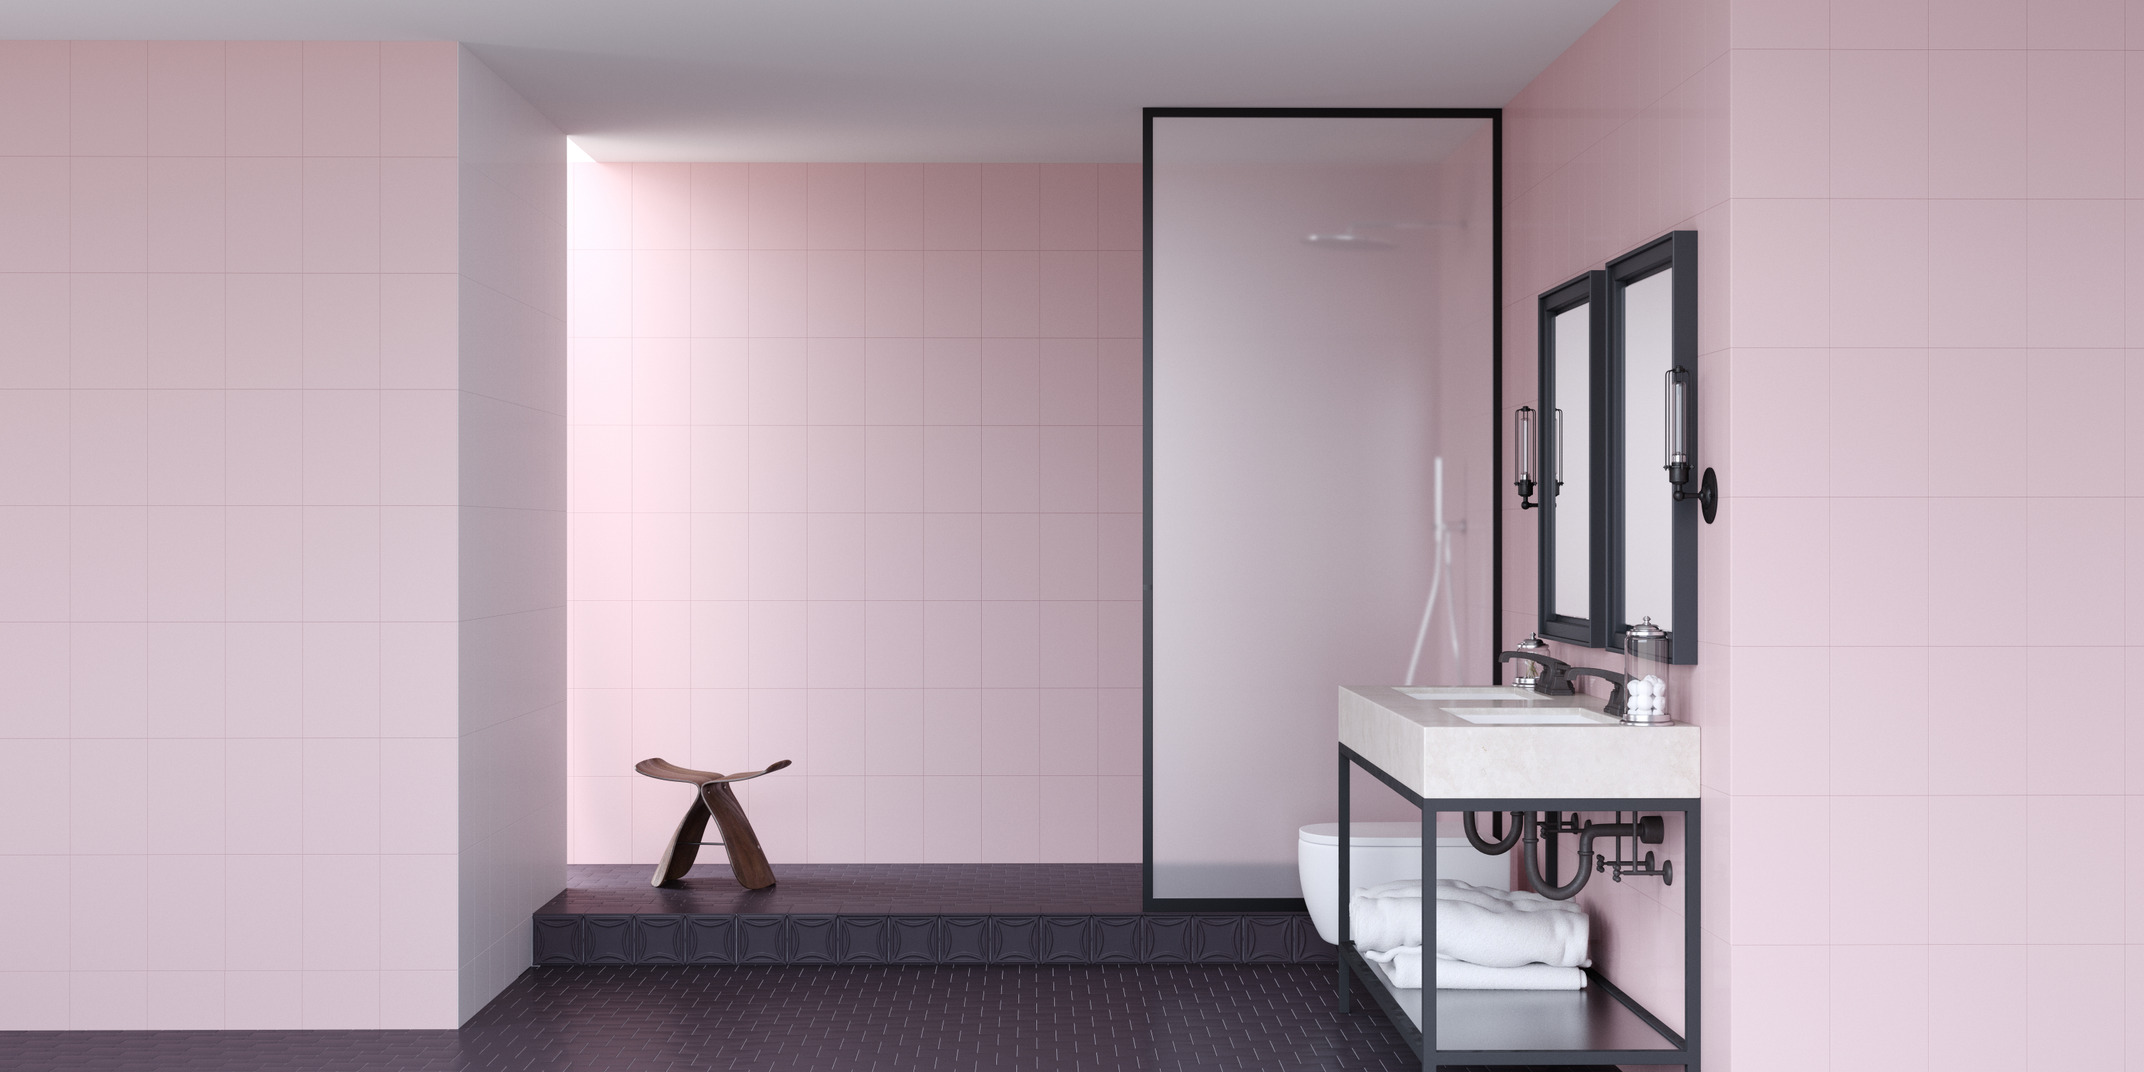 Bathroom with pink walls and black floor